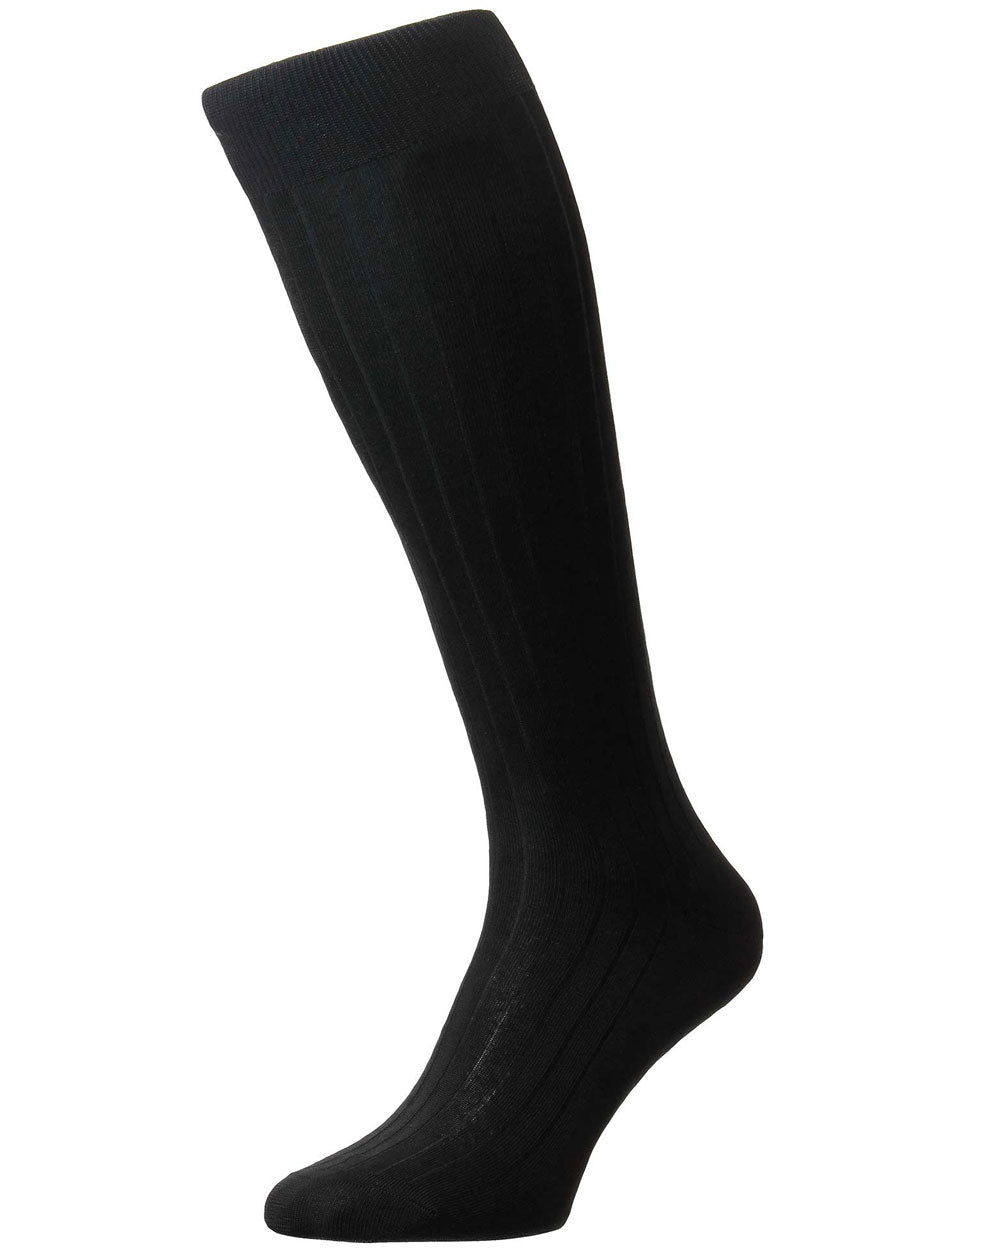 Asberley Silk Over the Calf Socks in Black